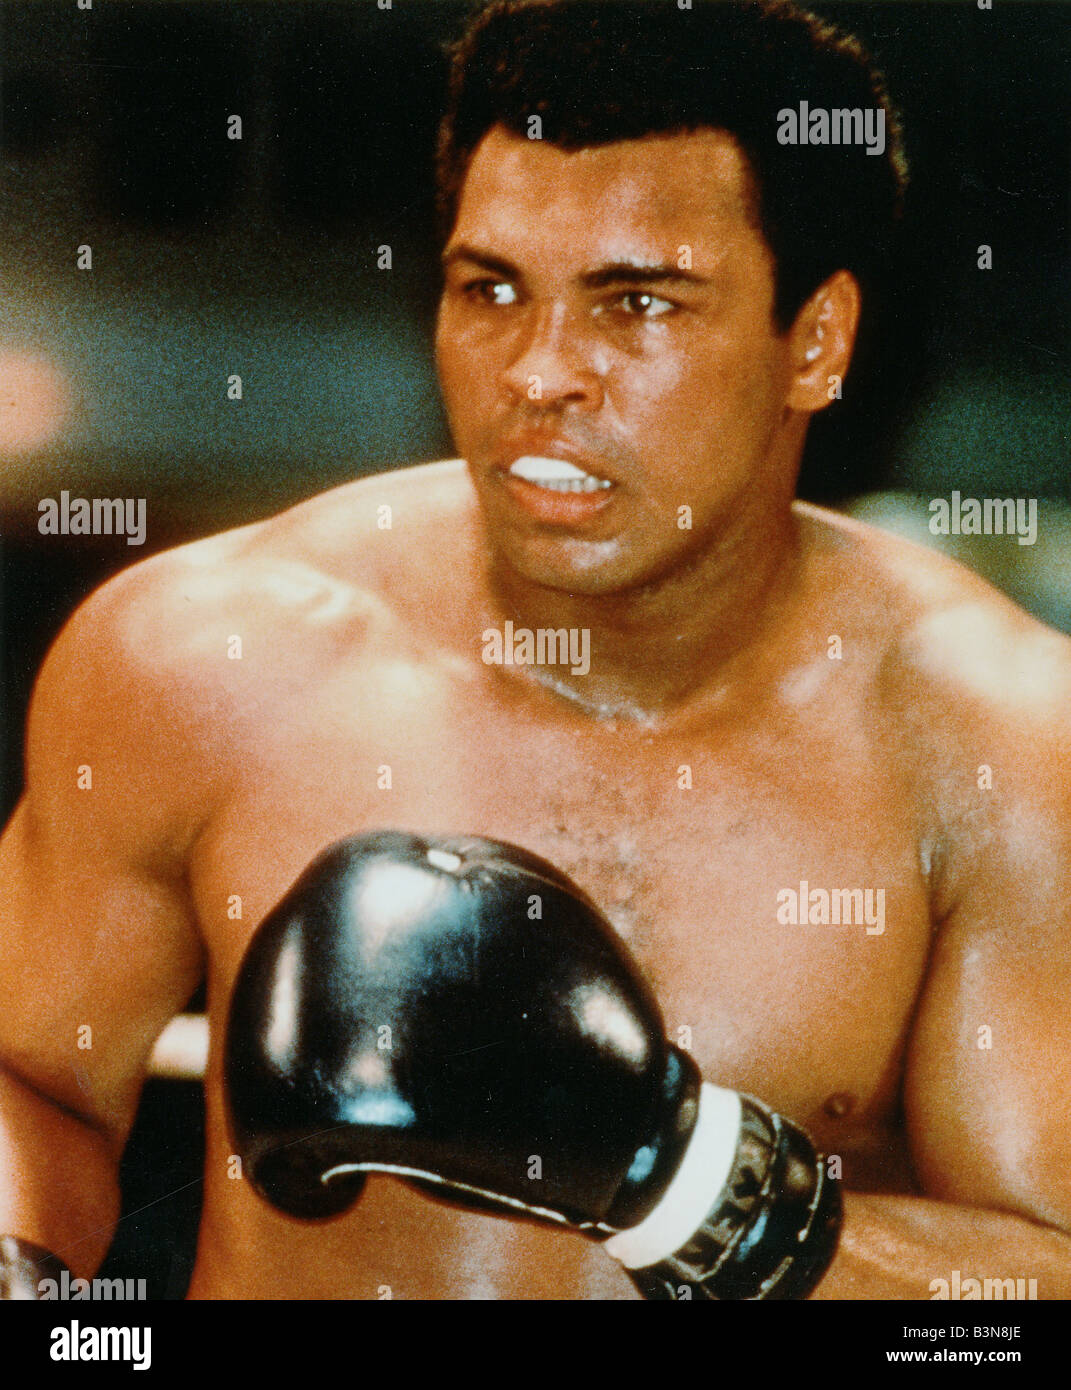 4 Muhammad Mohammed Ali Preprint Photos Boxer Cassius Clay Boxing Champion 